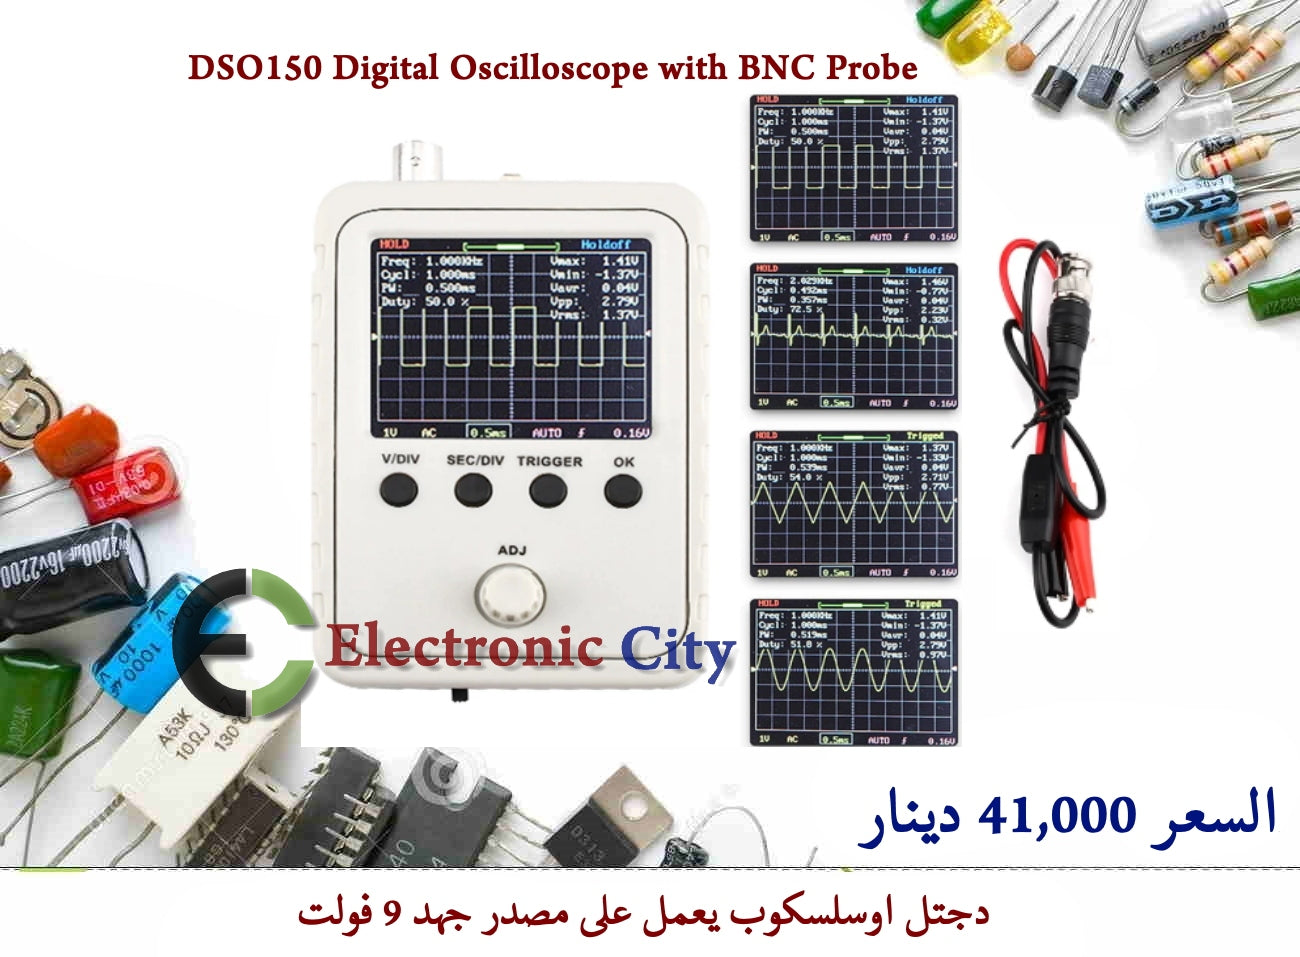 DSO150 Digital Oscilloscope with BNC Probe